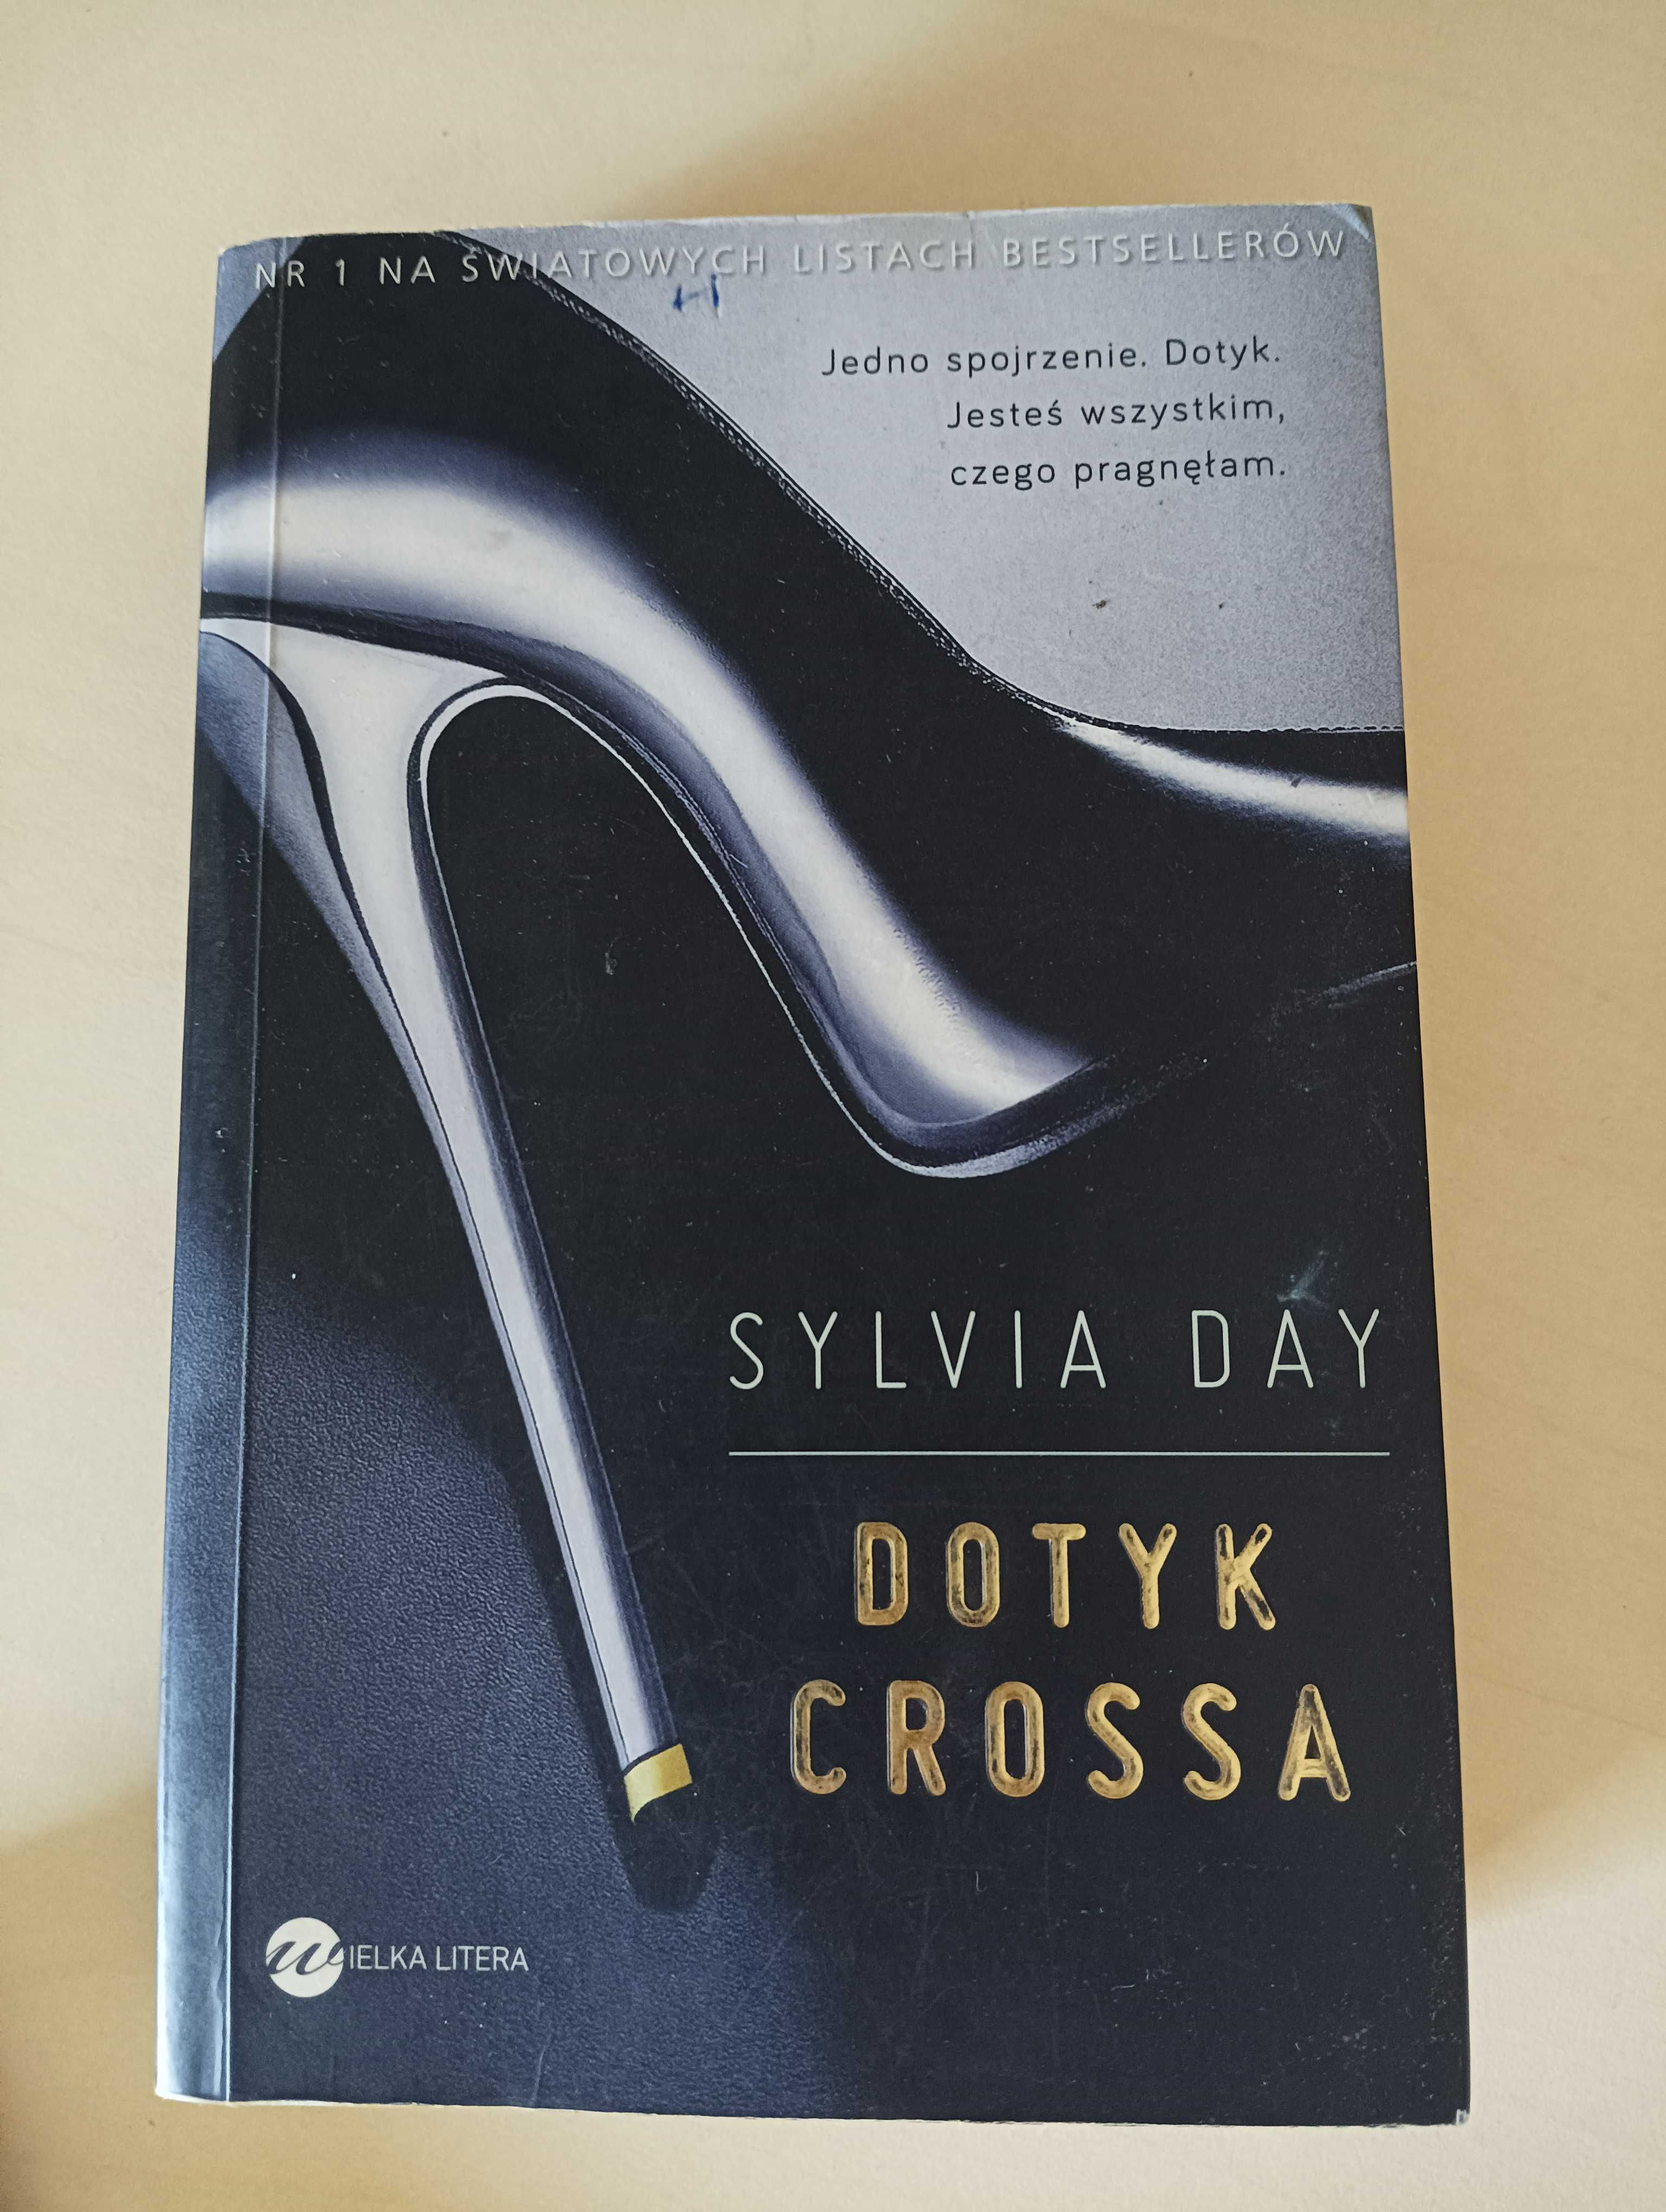 Książka "Dotyk Crossa" Sylvia Day